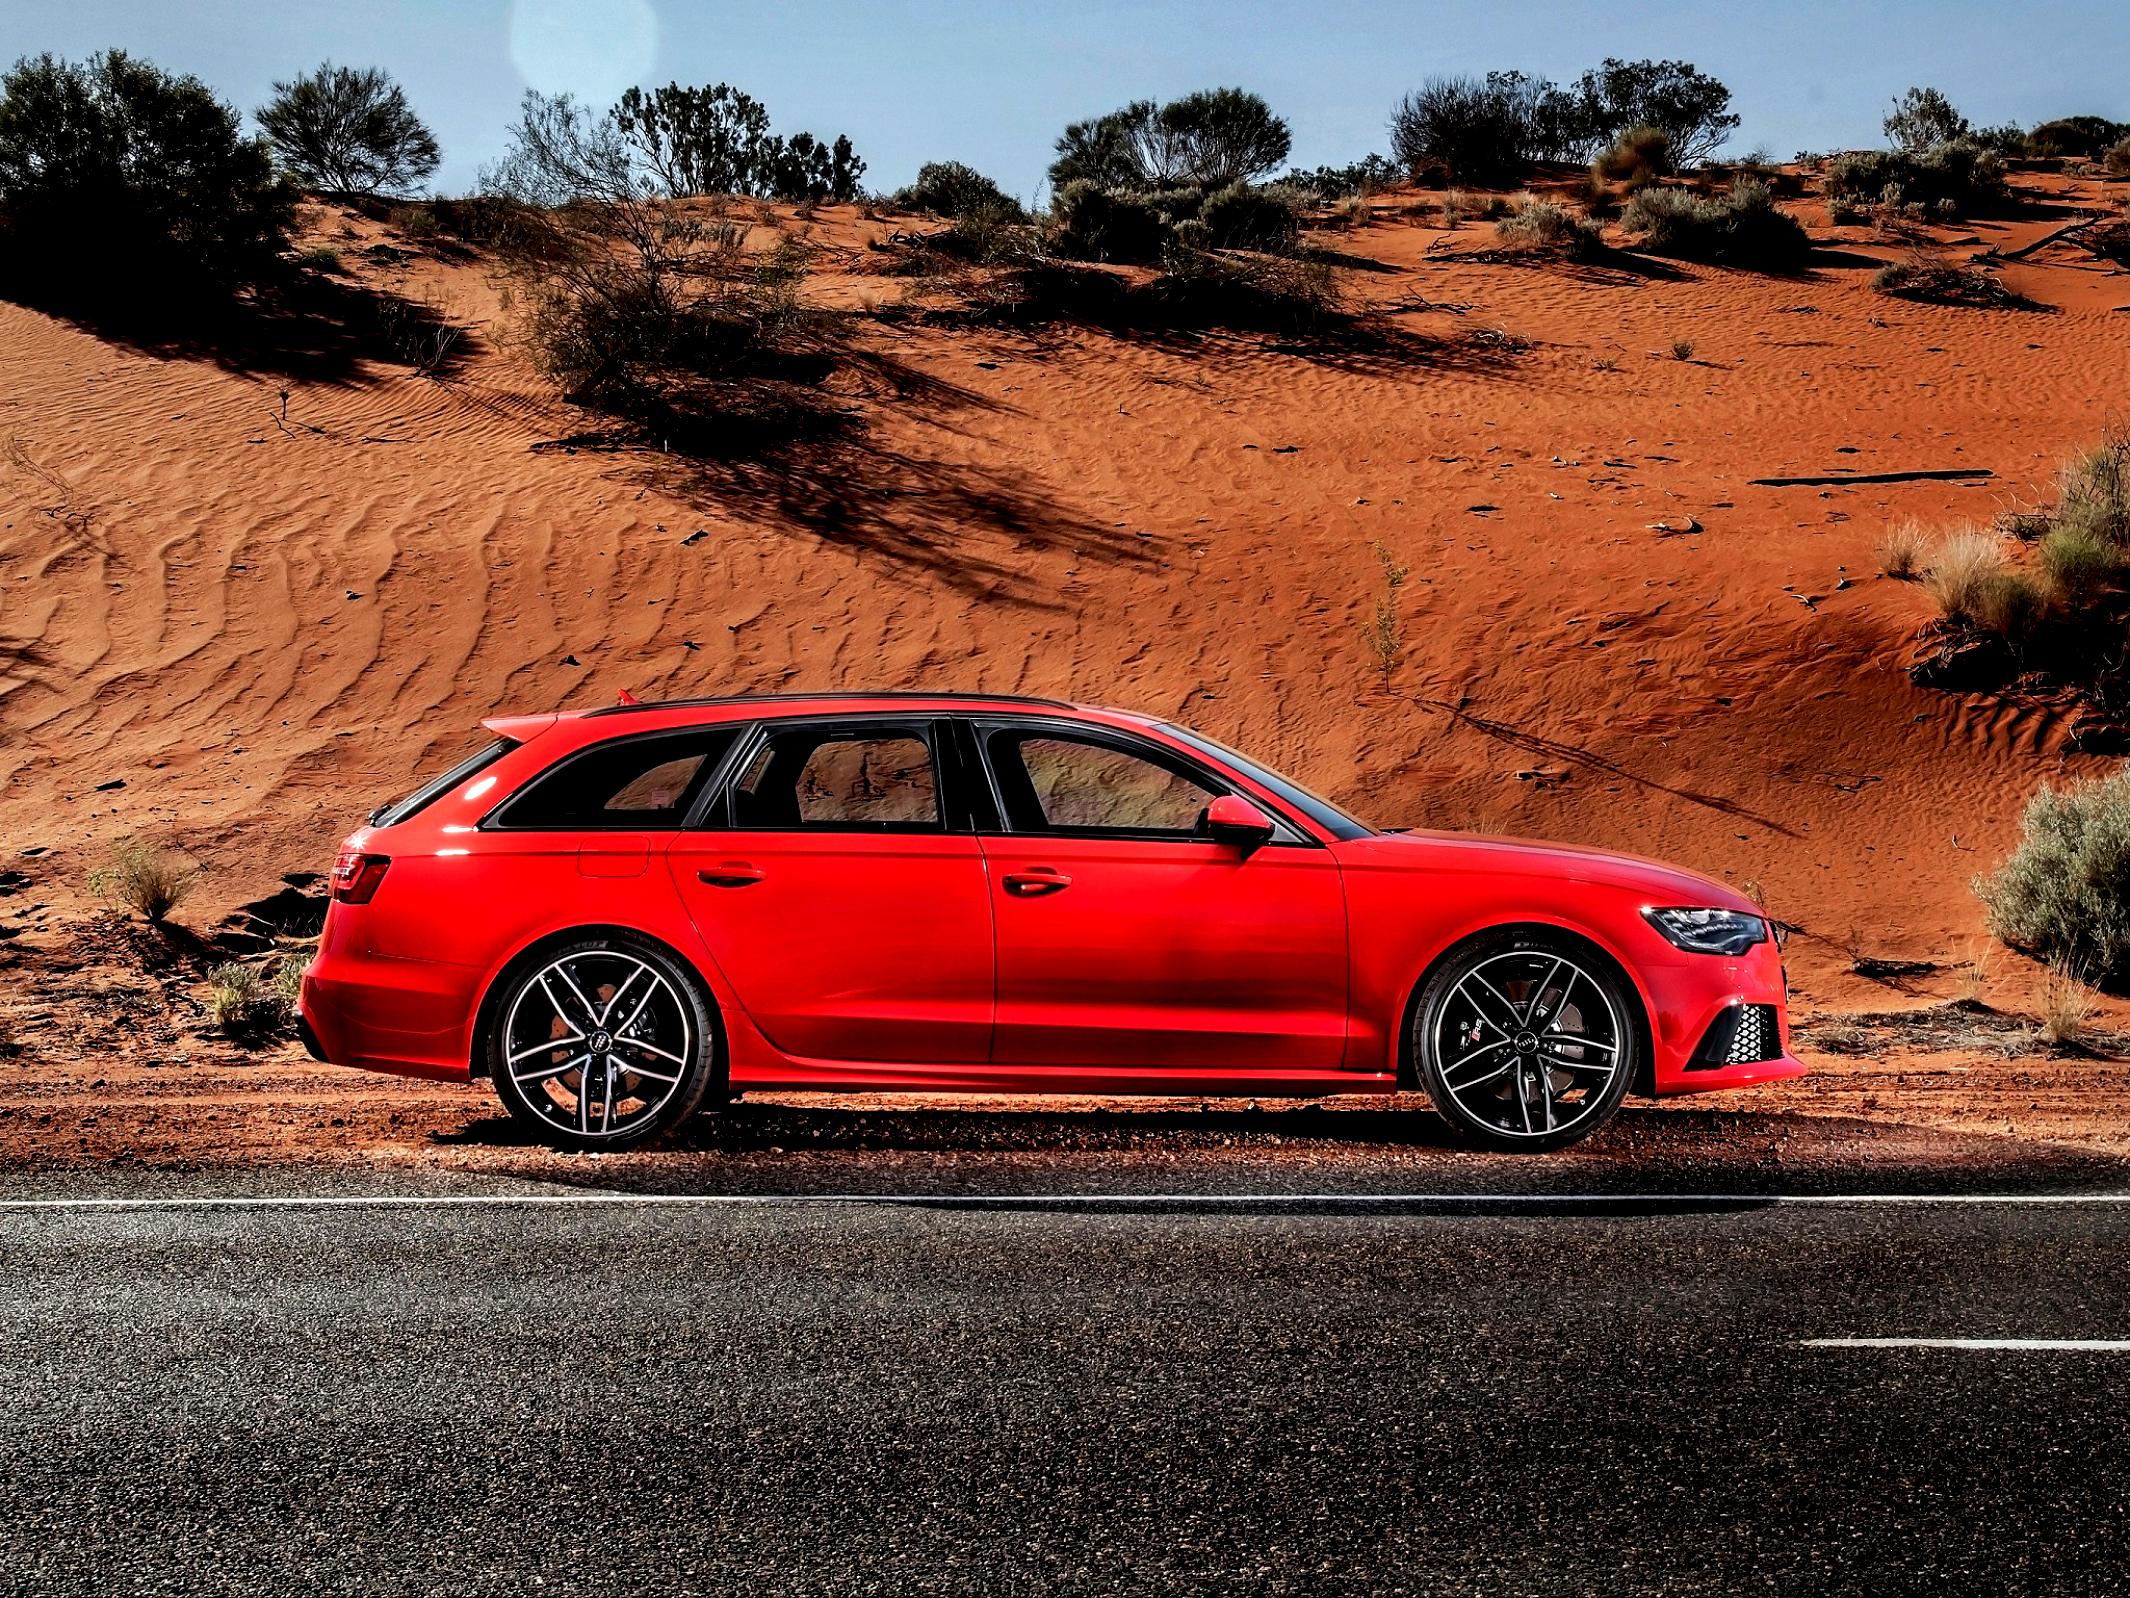 Audi RS6 Avant 2013 on MotoImg.com